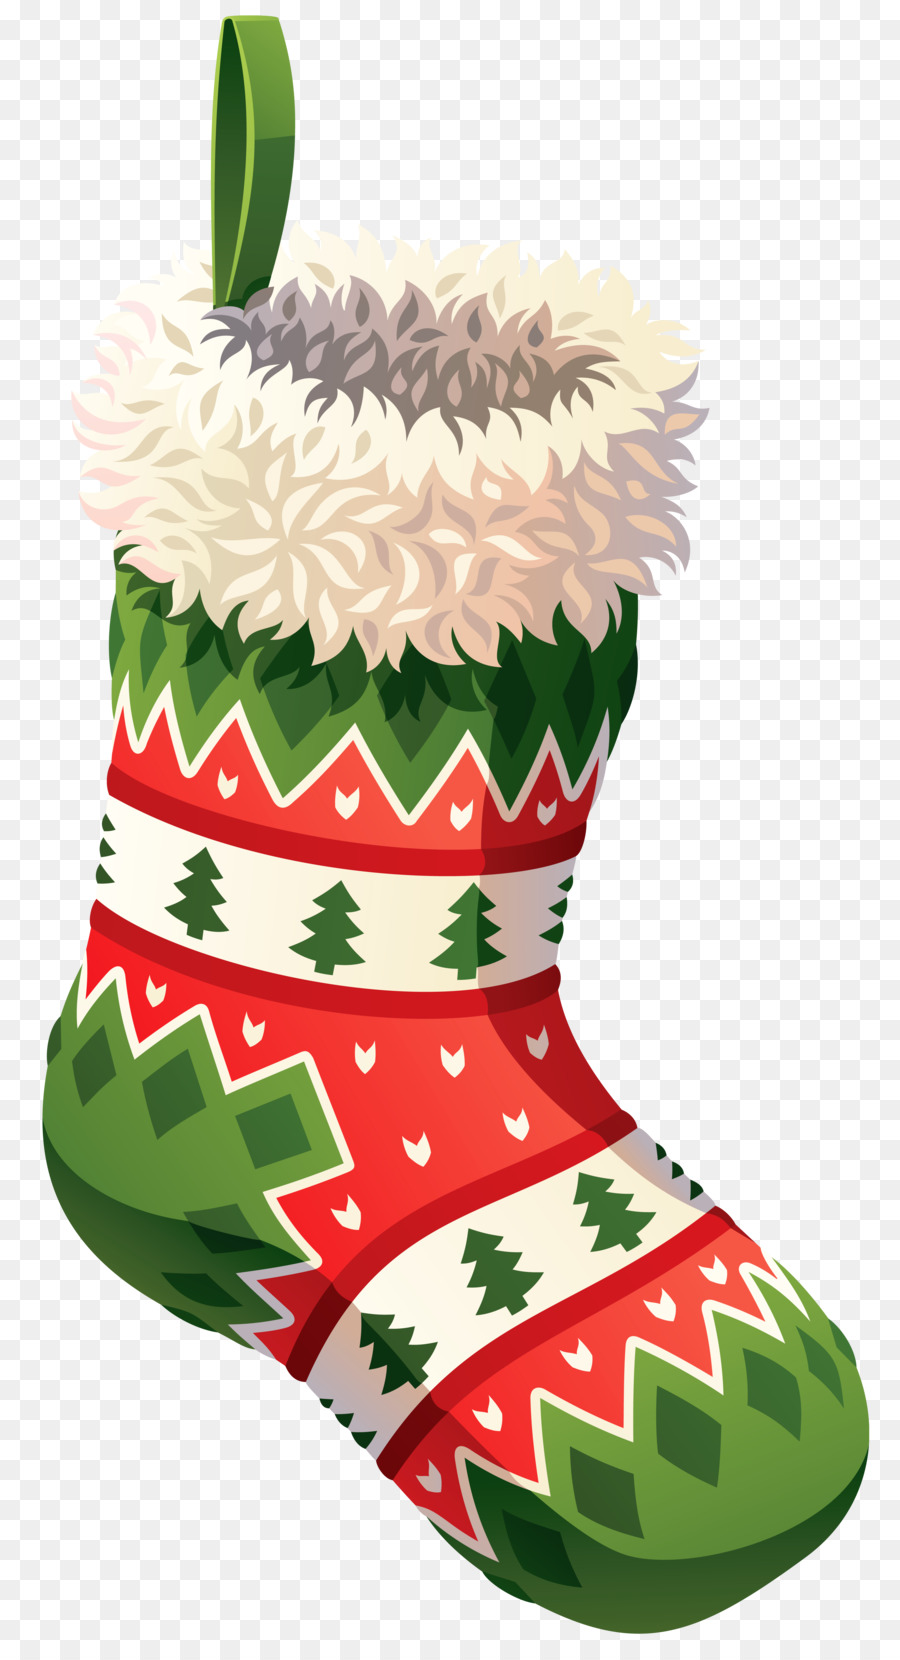 Christmas Stockings Clip art - socks png download - 3389*6218 - Free Transparent Christmas Stockings png Download.